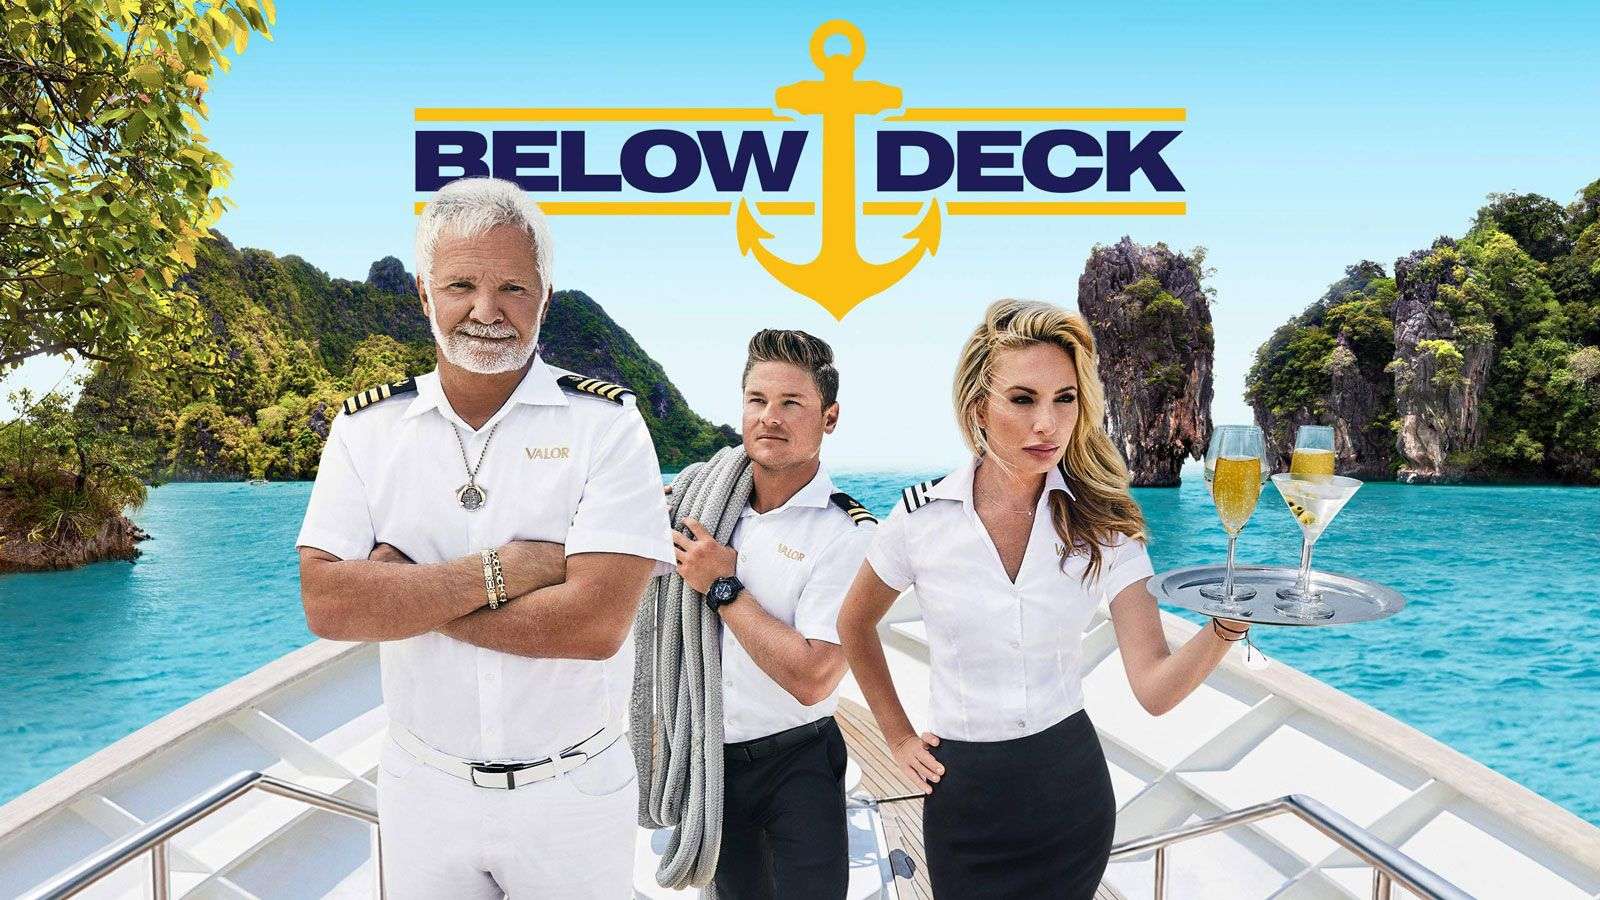 Below Deck crew members